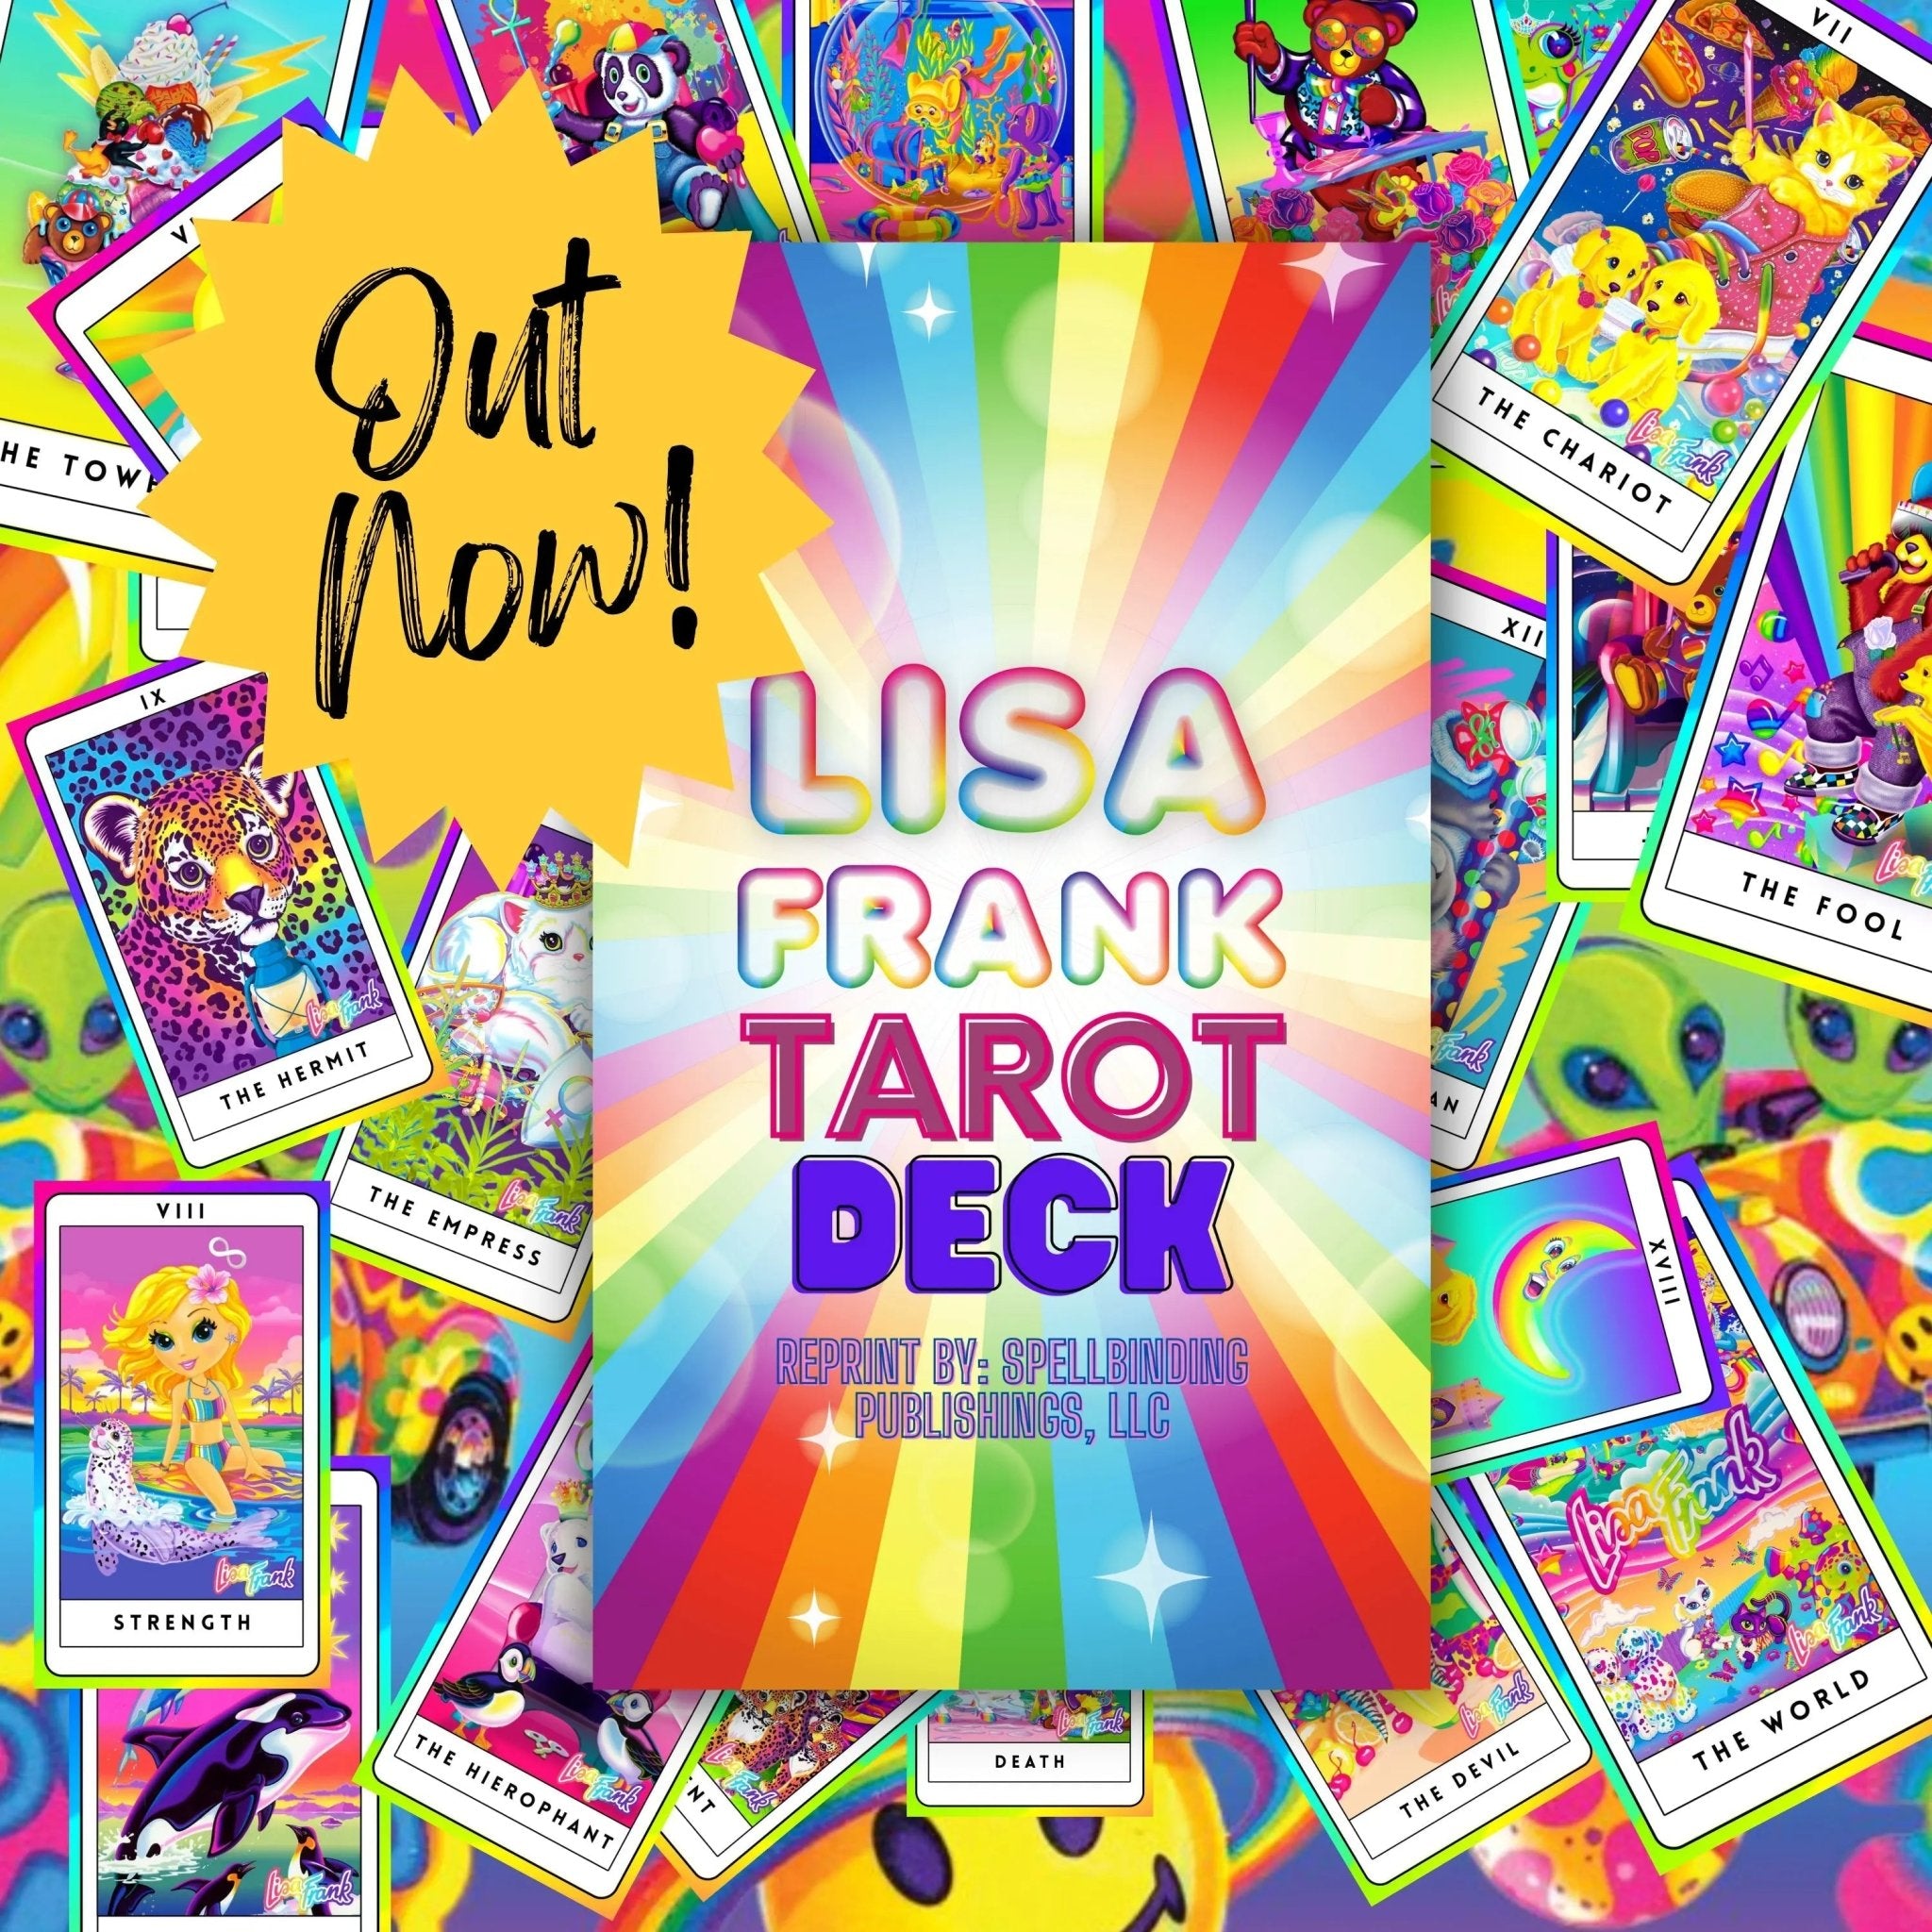  Lisa Frank Tarot Deck by Spellbinding Publishings sold by LABShaman